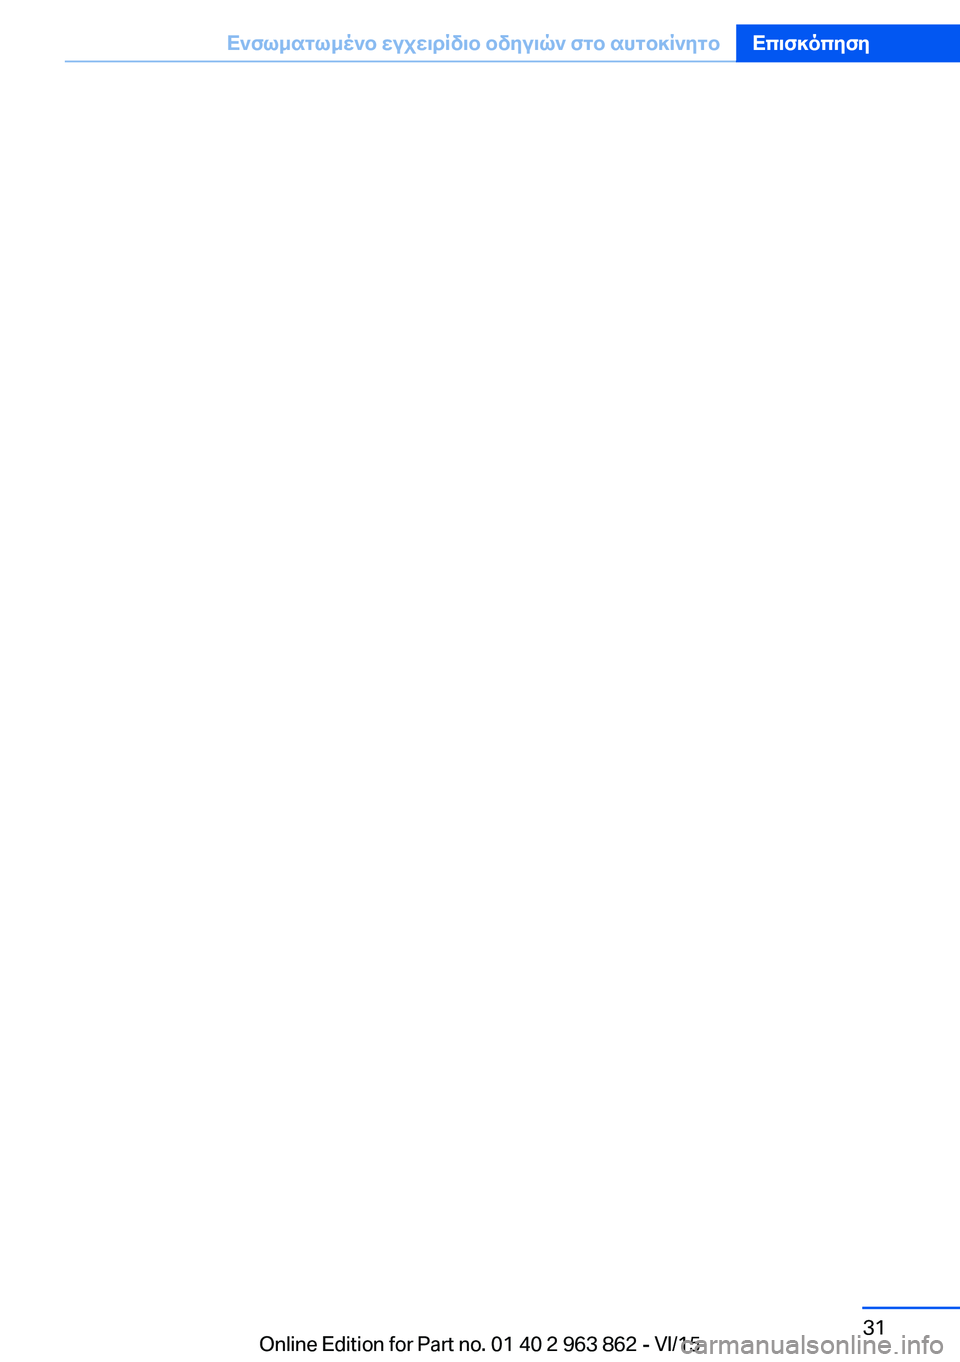 BMW 2 SERIES COUPE 2016  ΟΔΗΓΌΣ ΧΡΉΣΗΣ (in Greek) Seite 31Ενσωματωμένο εγχειρίδιο οδηγιών στο αυτοκίνητοΕπισκόπηση31
Online Edition for Part no. 01 40 2 963 862 - VI/15 